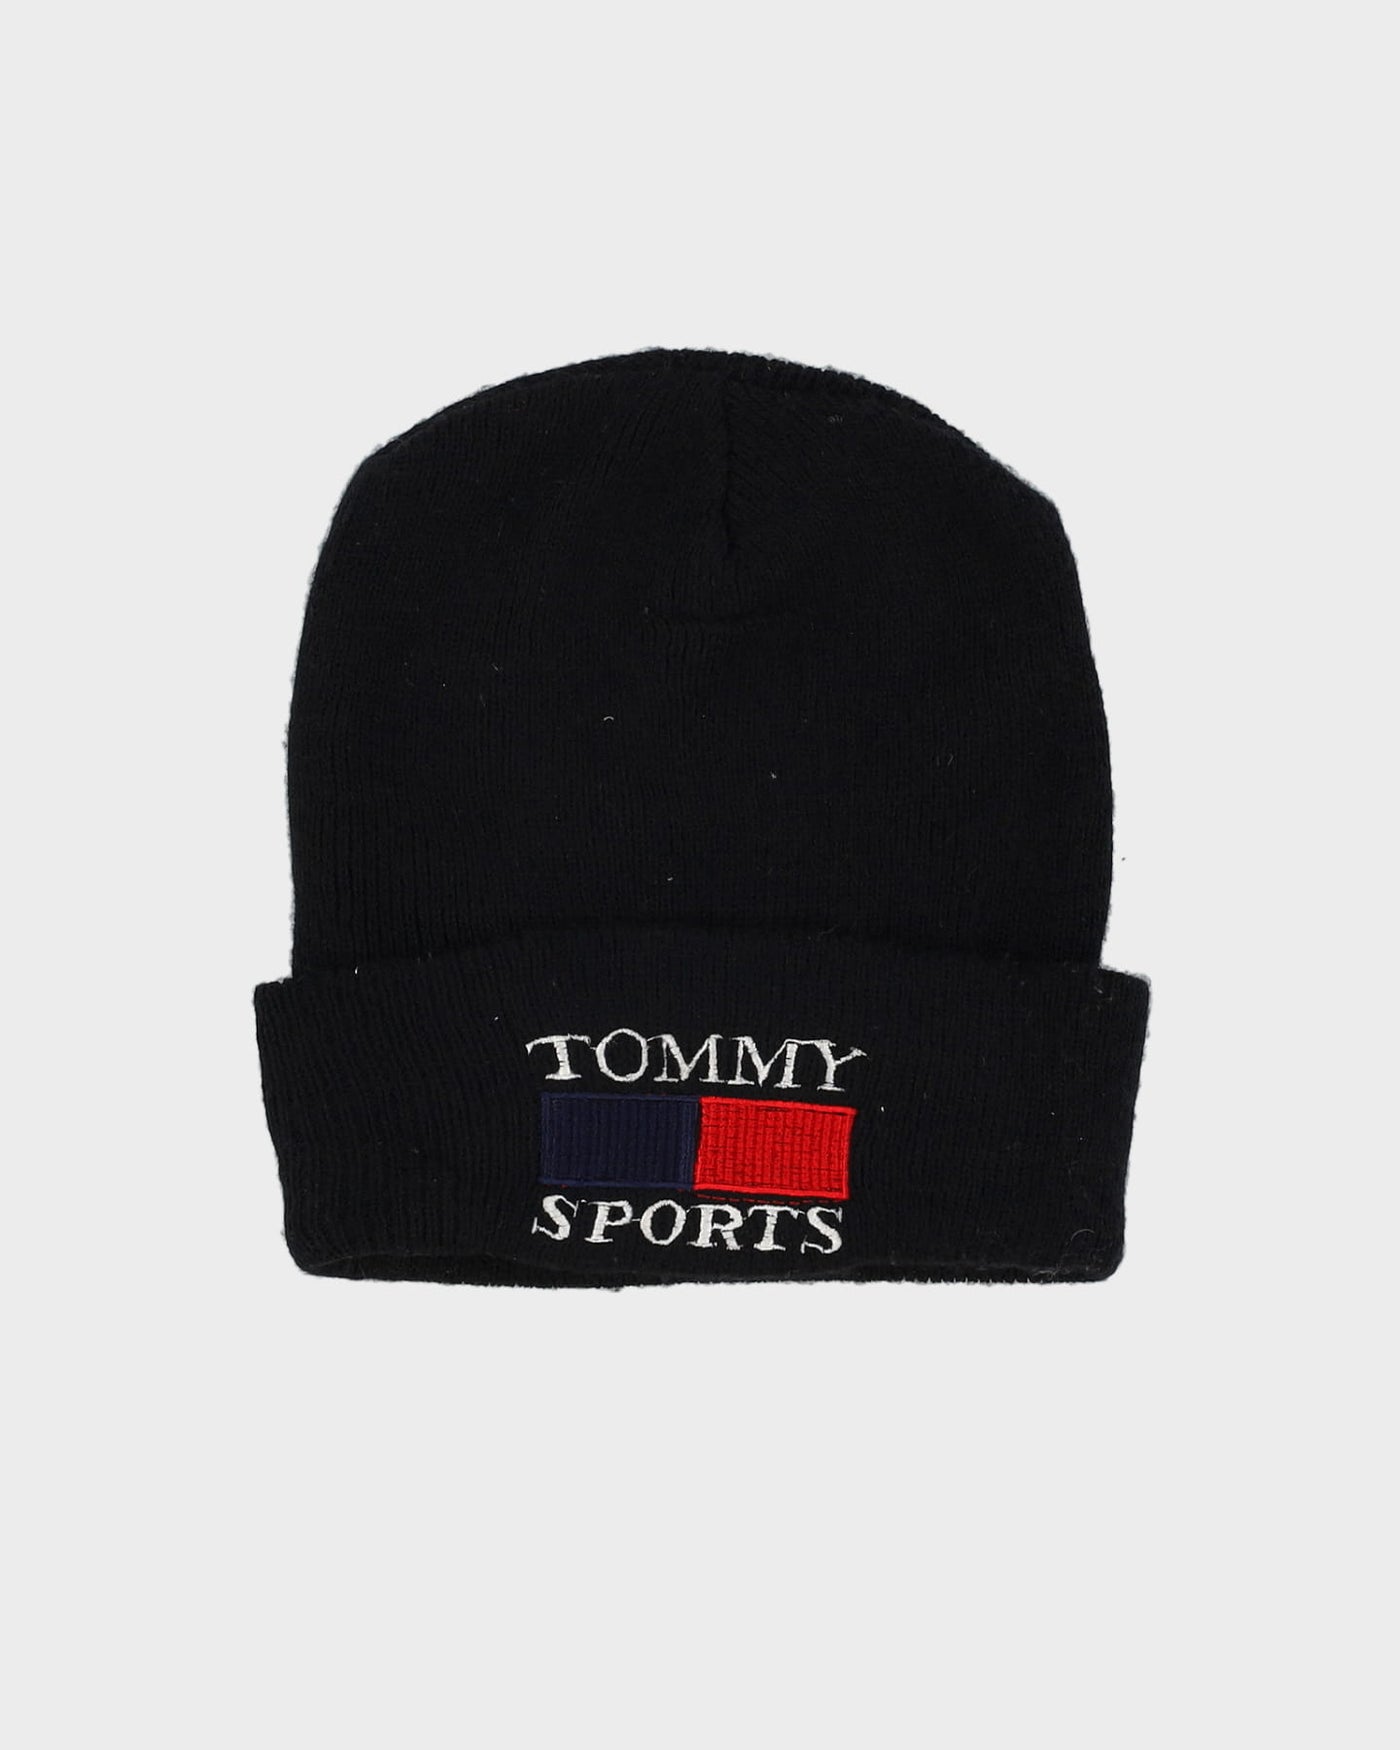 Tommy Hilfiger Black Embroidered Logo Beanie